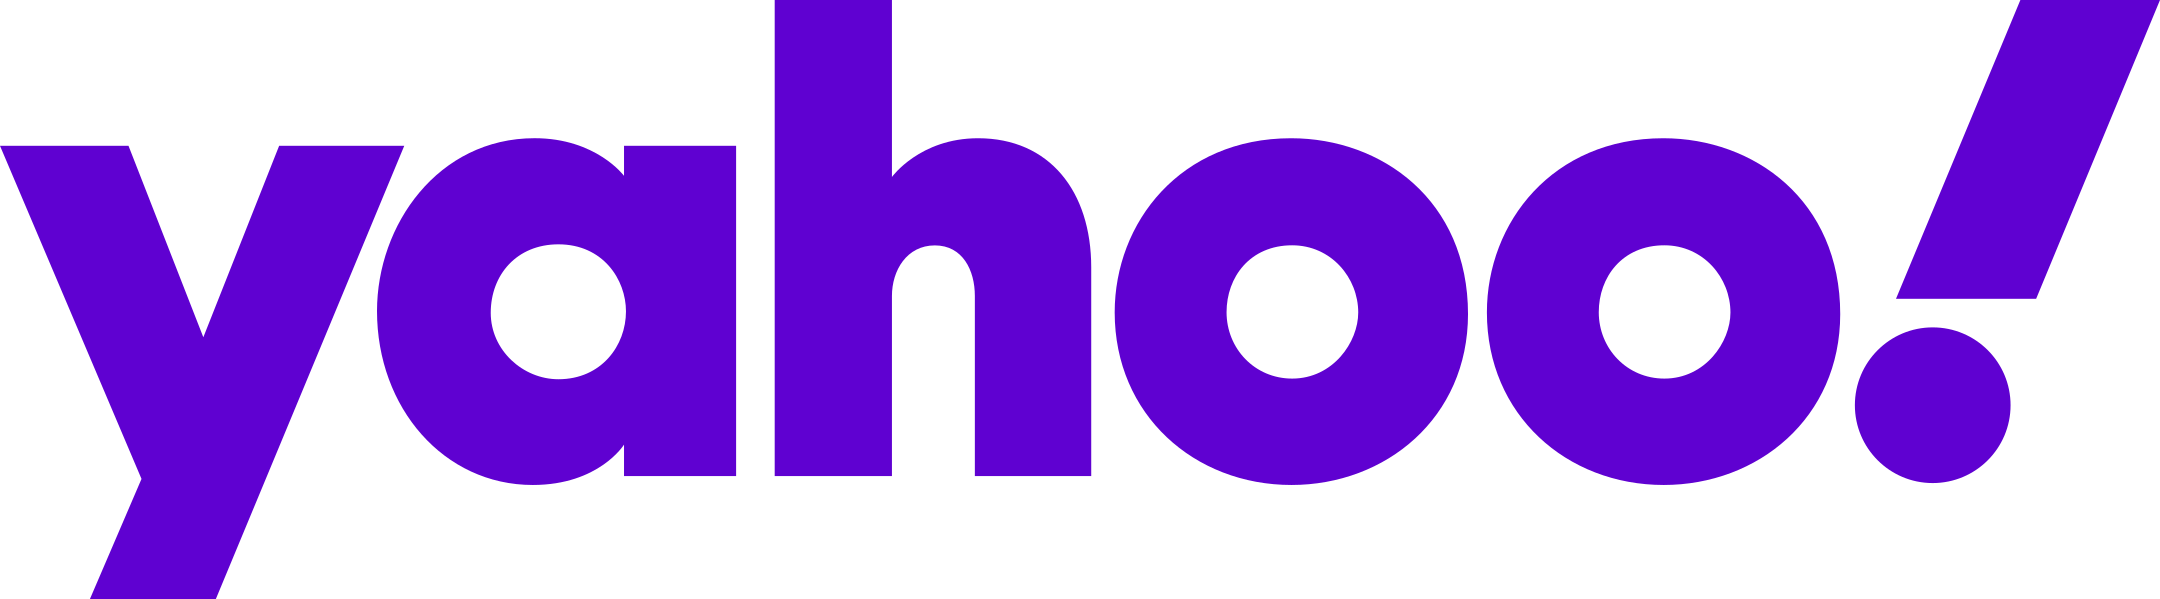 Yahoo Logo PNG Clipart